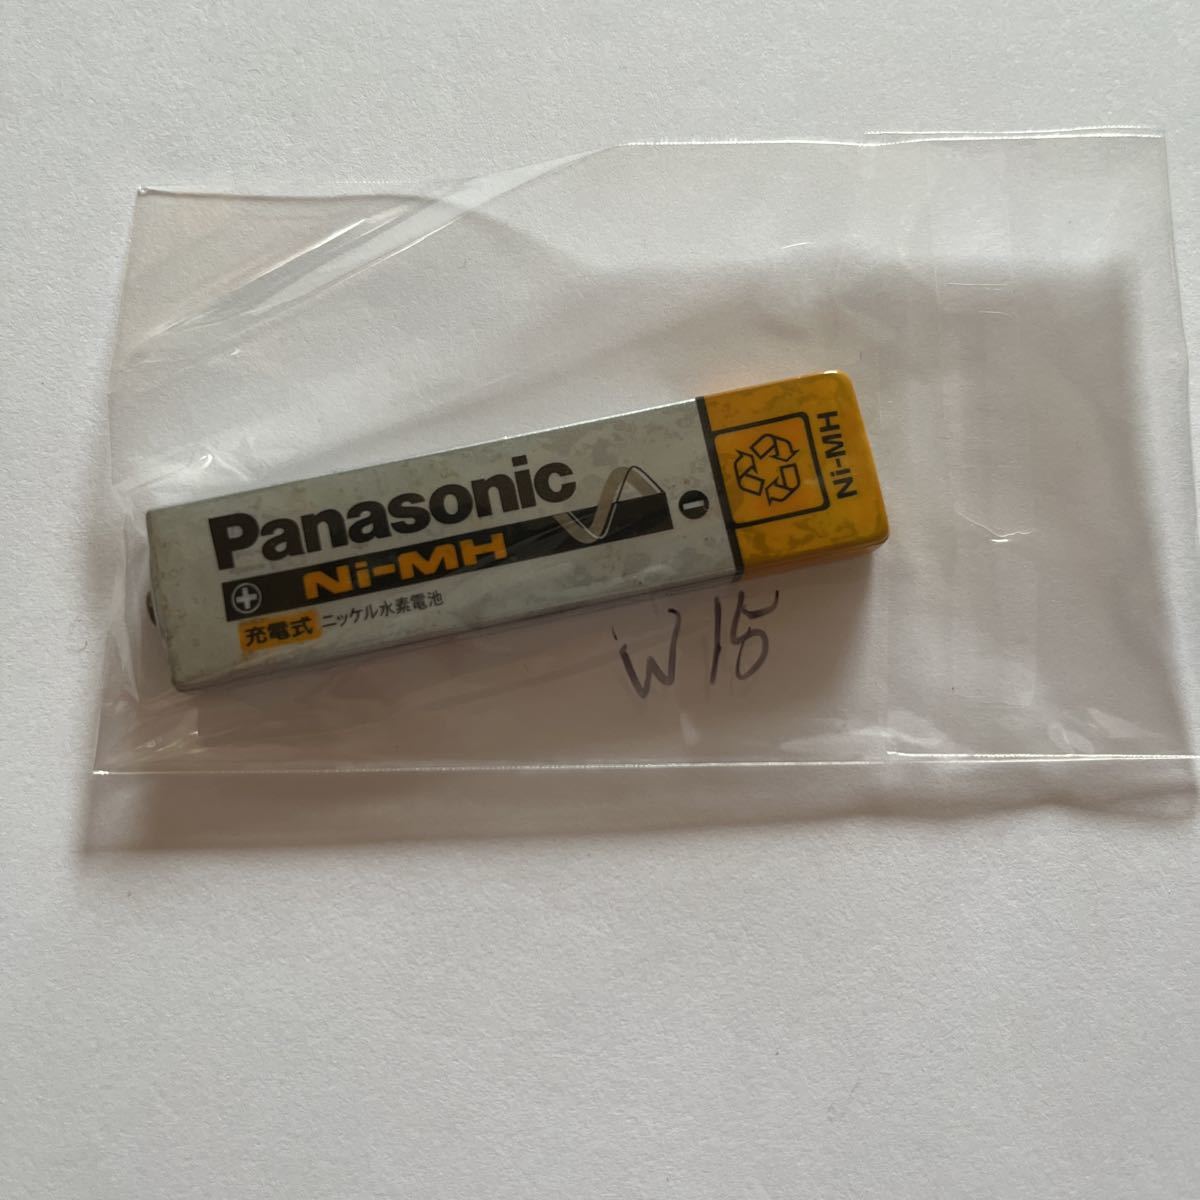  operation not yet verification Panasonic Panasonic chewing gum battery rechargeable battery HHF-AZ01 1350mAh CD player? MD player? Walkman exclusive use Junk 